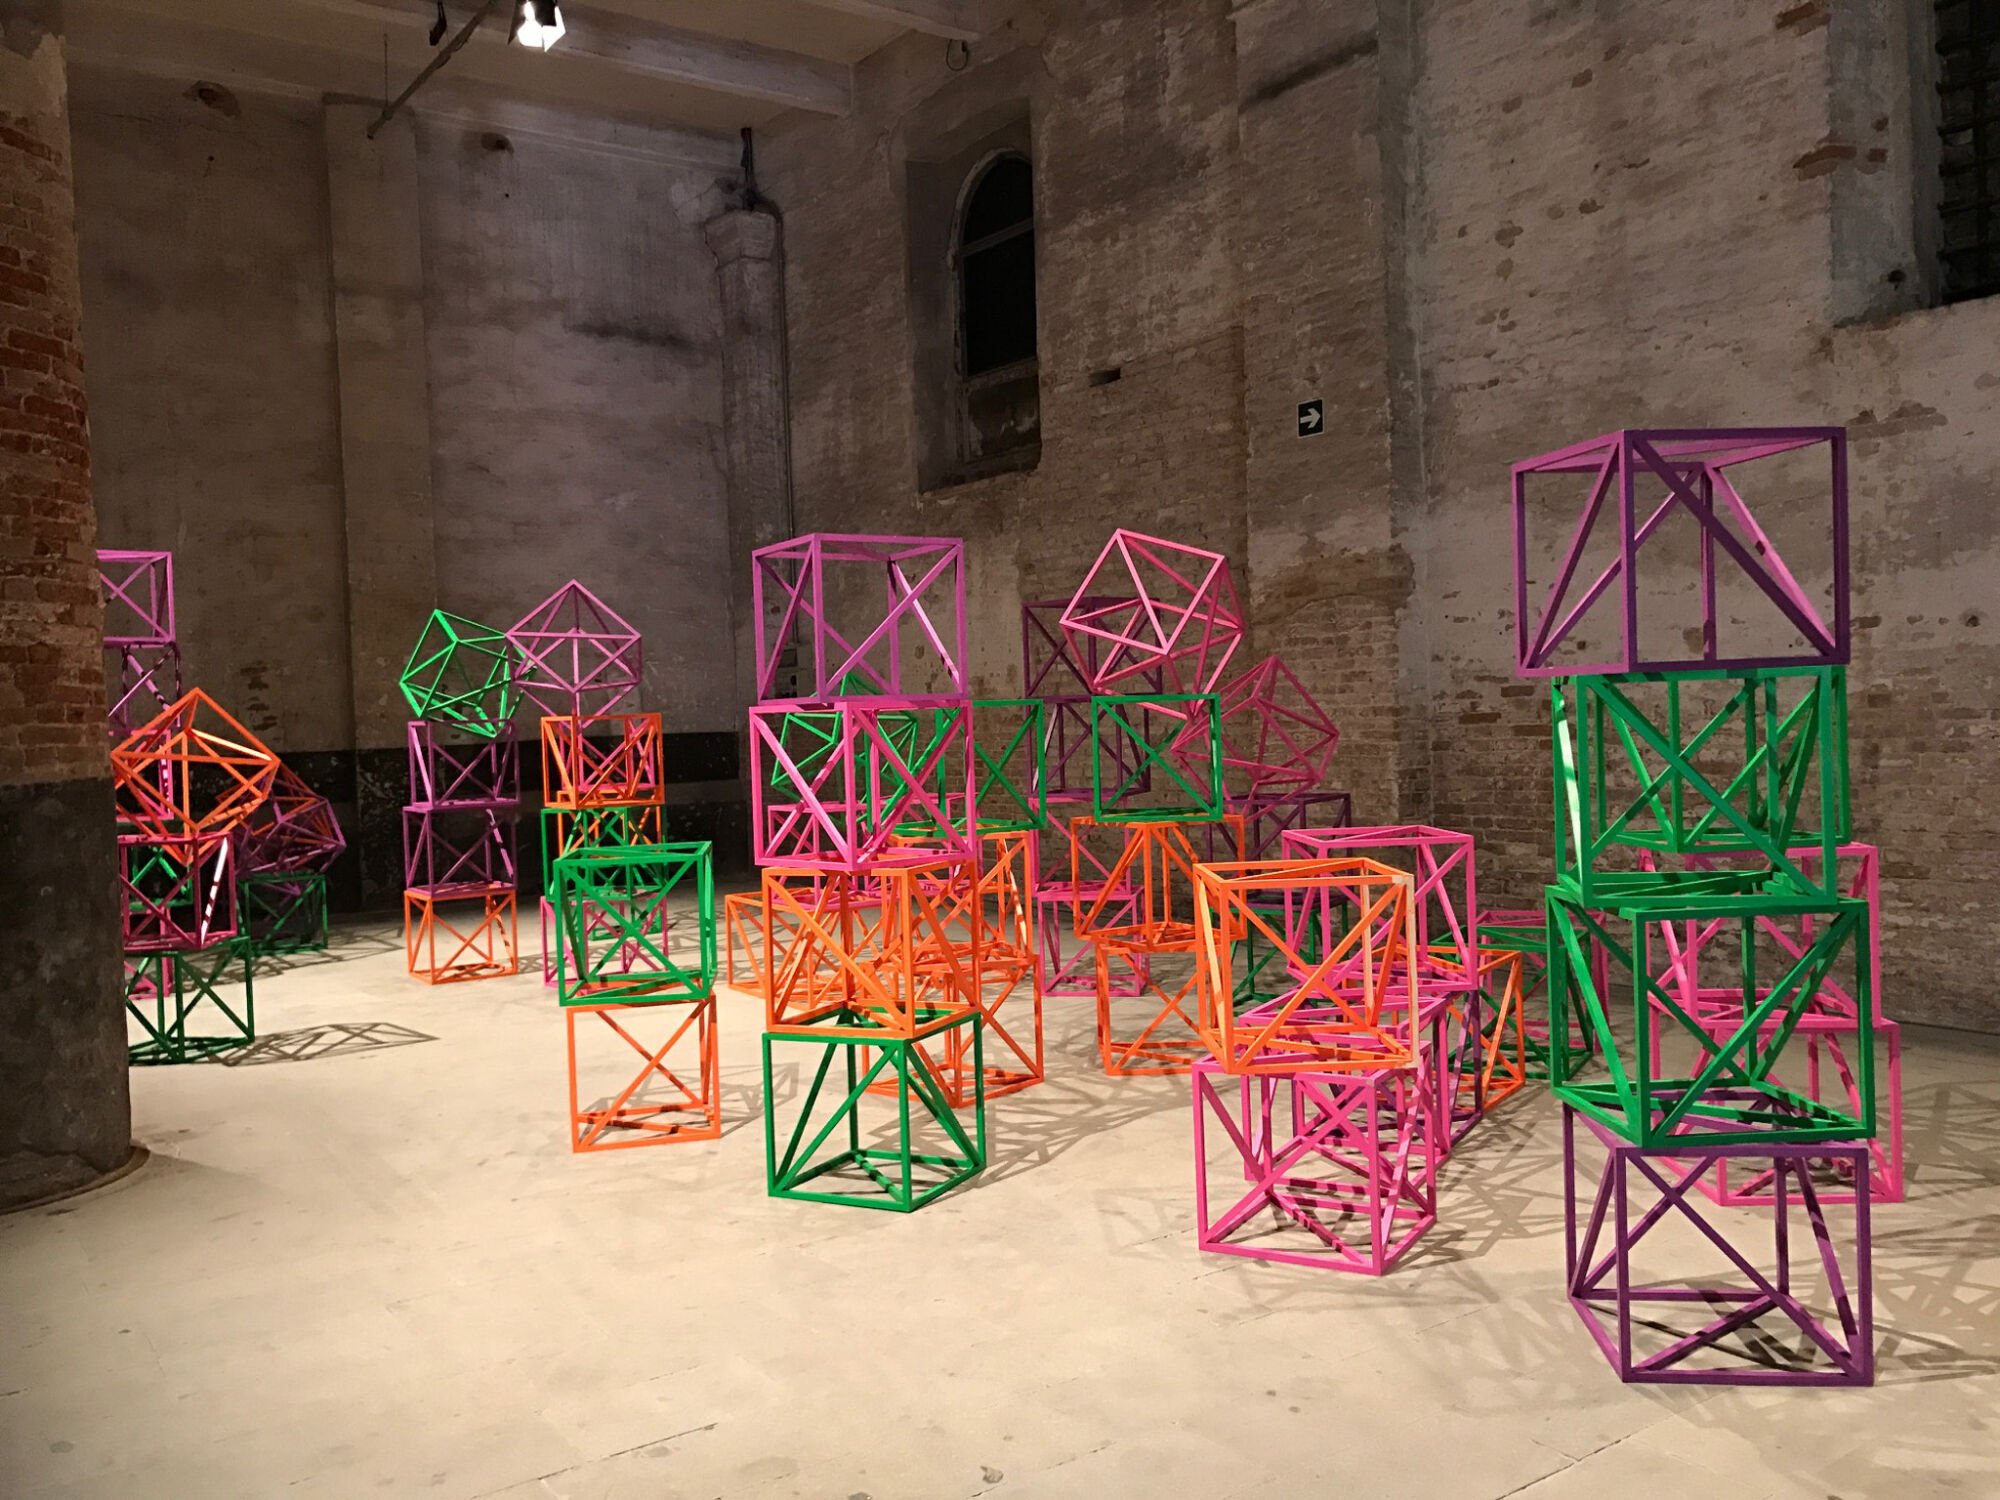 The Wick - Rasheed Araeen
Zero to Infinity in Venice, 2016-17, installation view, Arsenale, 57th Venice Biennale. 
Courtesy La Biennale di Venezia, Rasheed Araeen and Grosvenor Gallery. Photograph Italo Rondinella.
